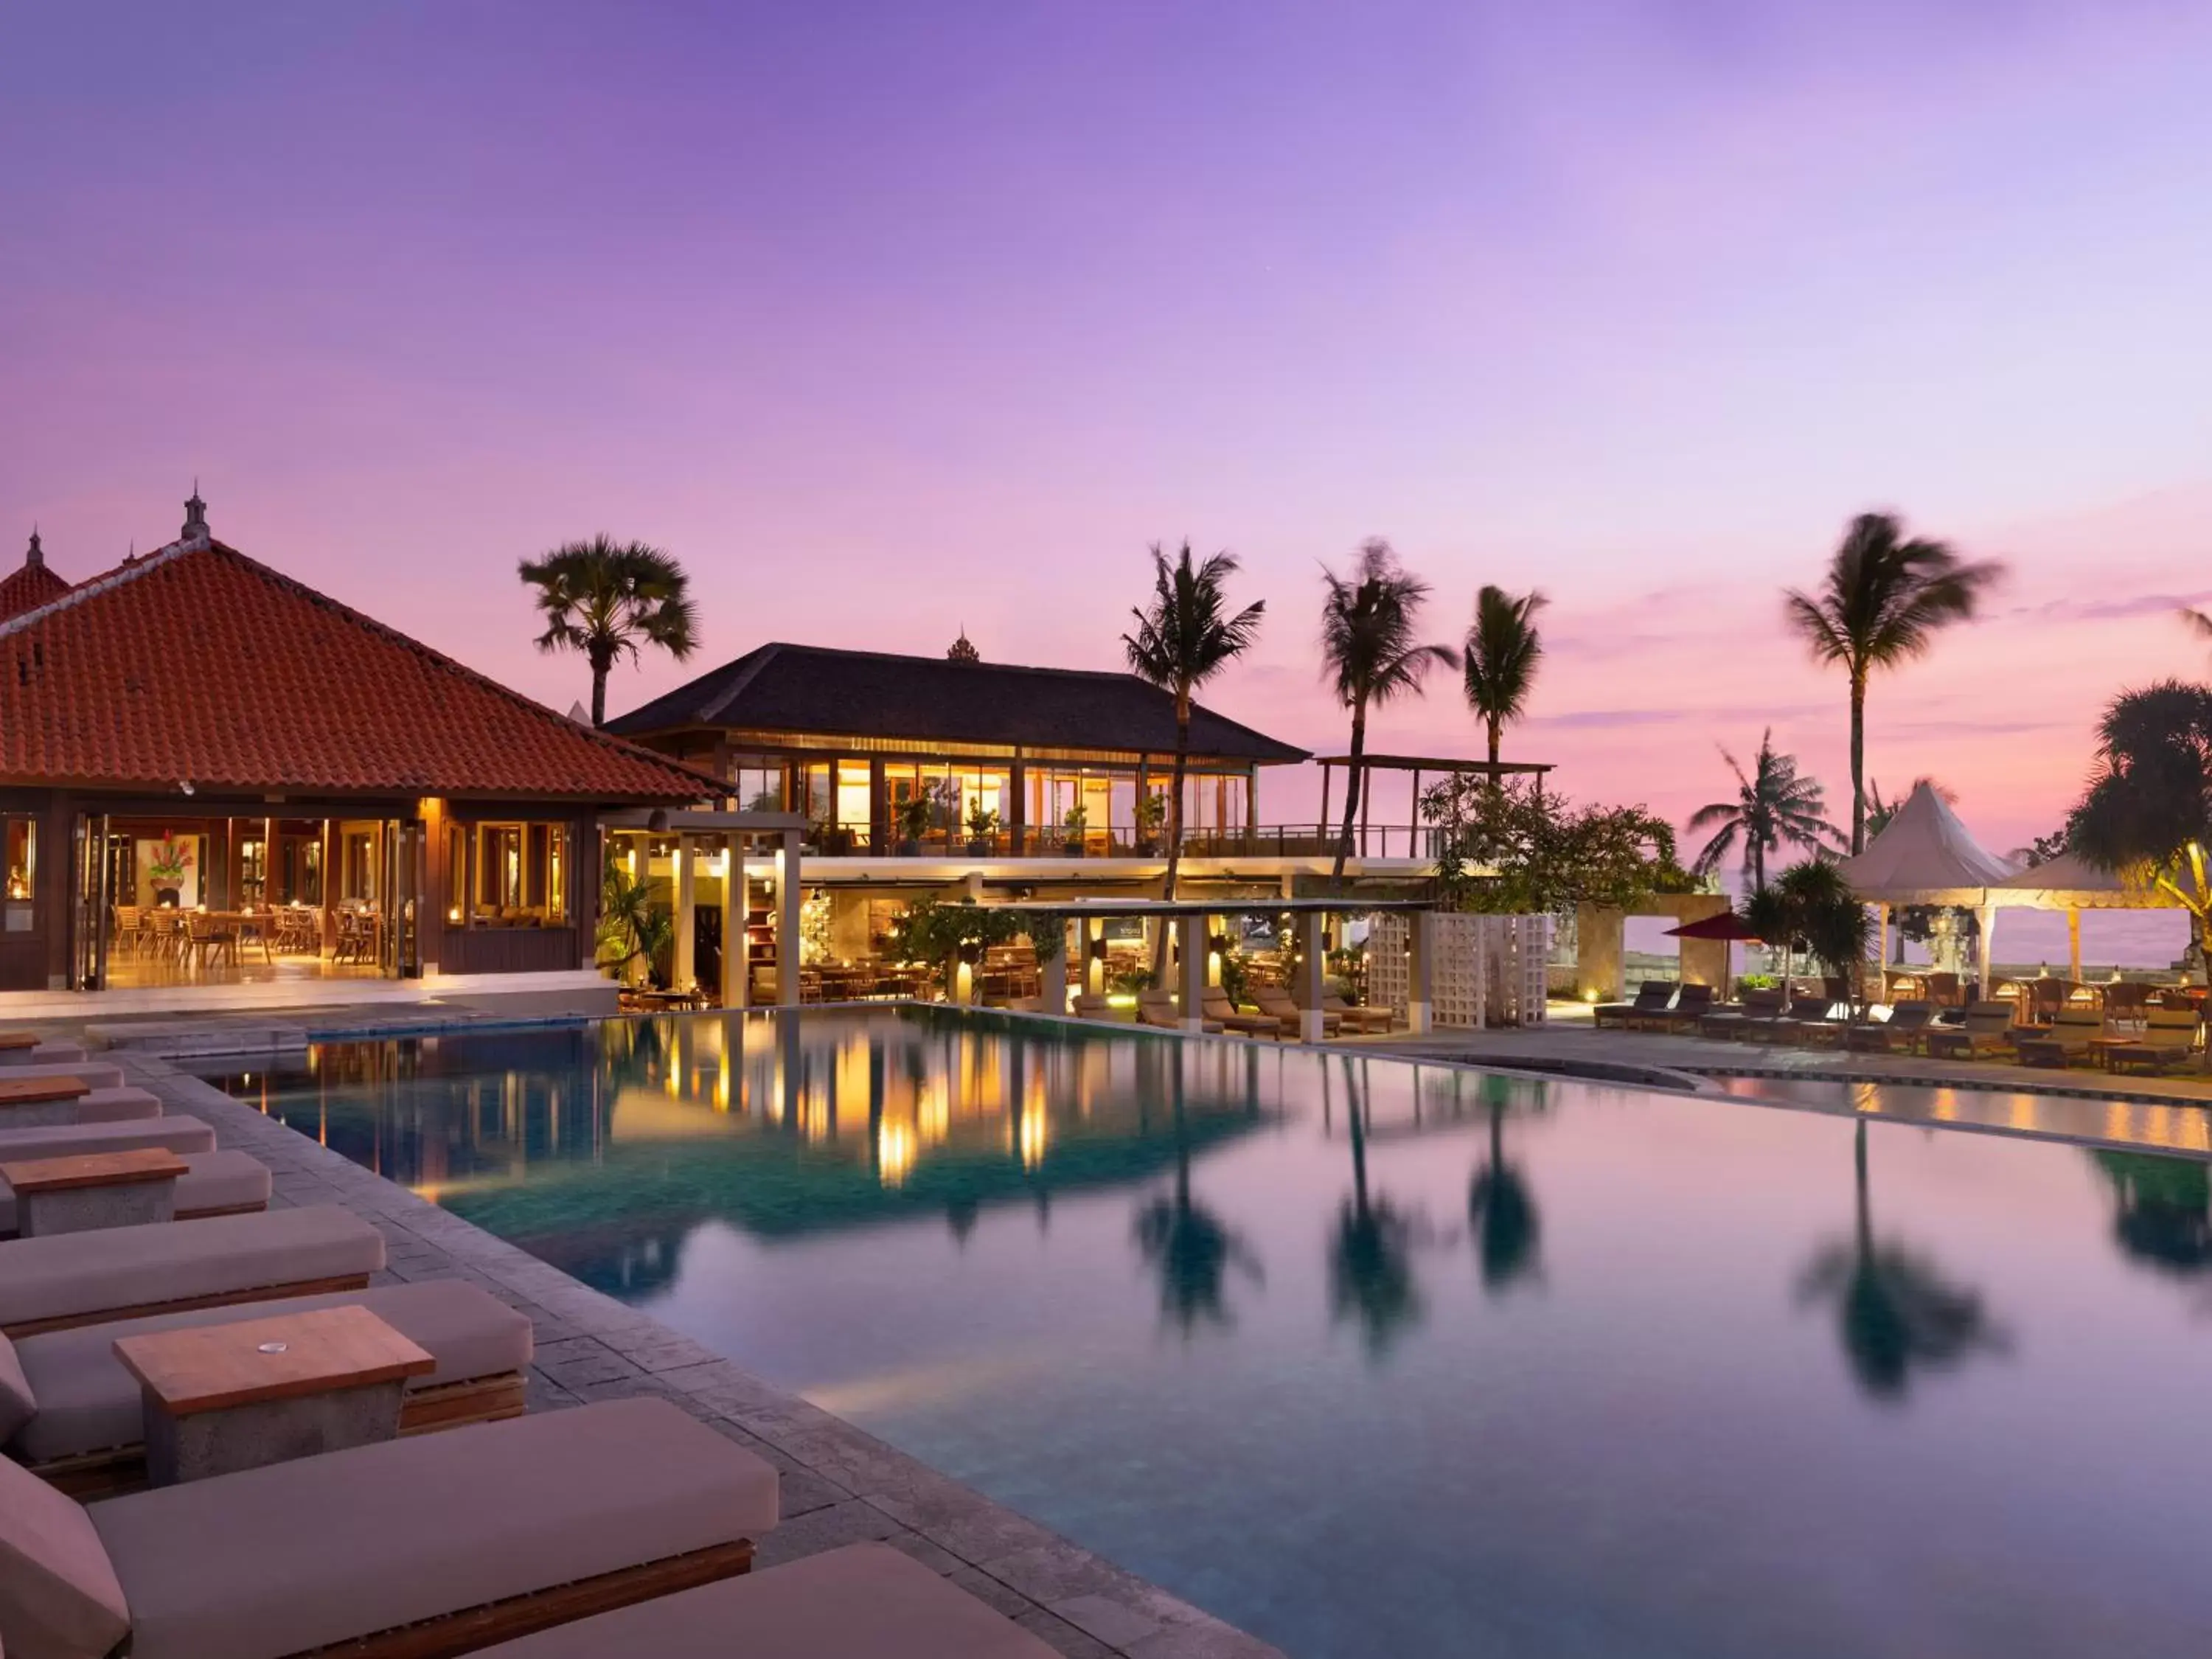 Swimming Pool in Bali Niksoma Boutique Beach Resort